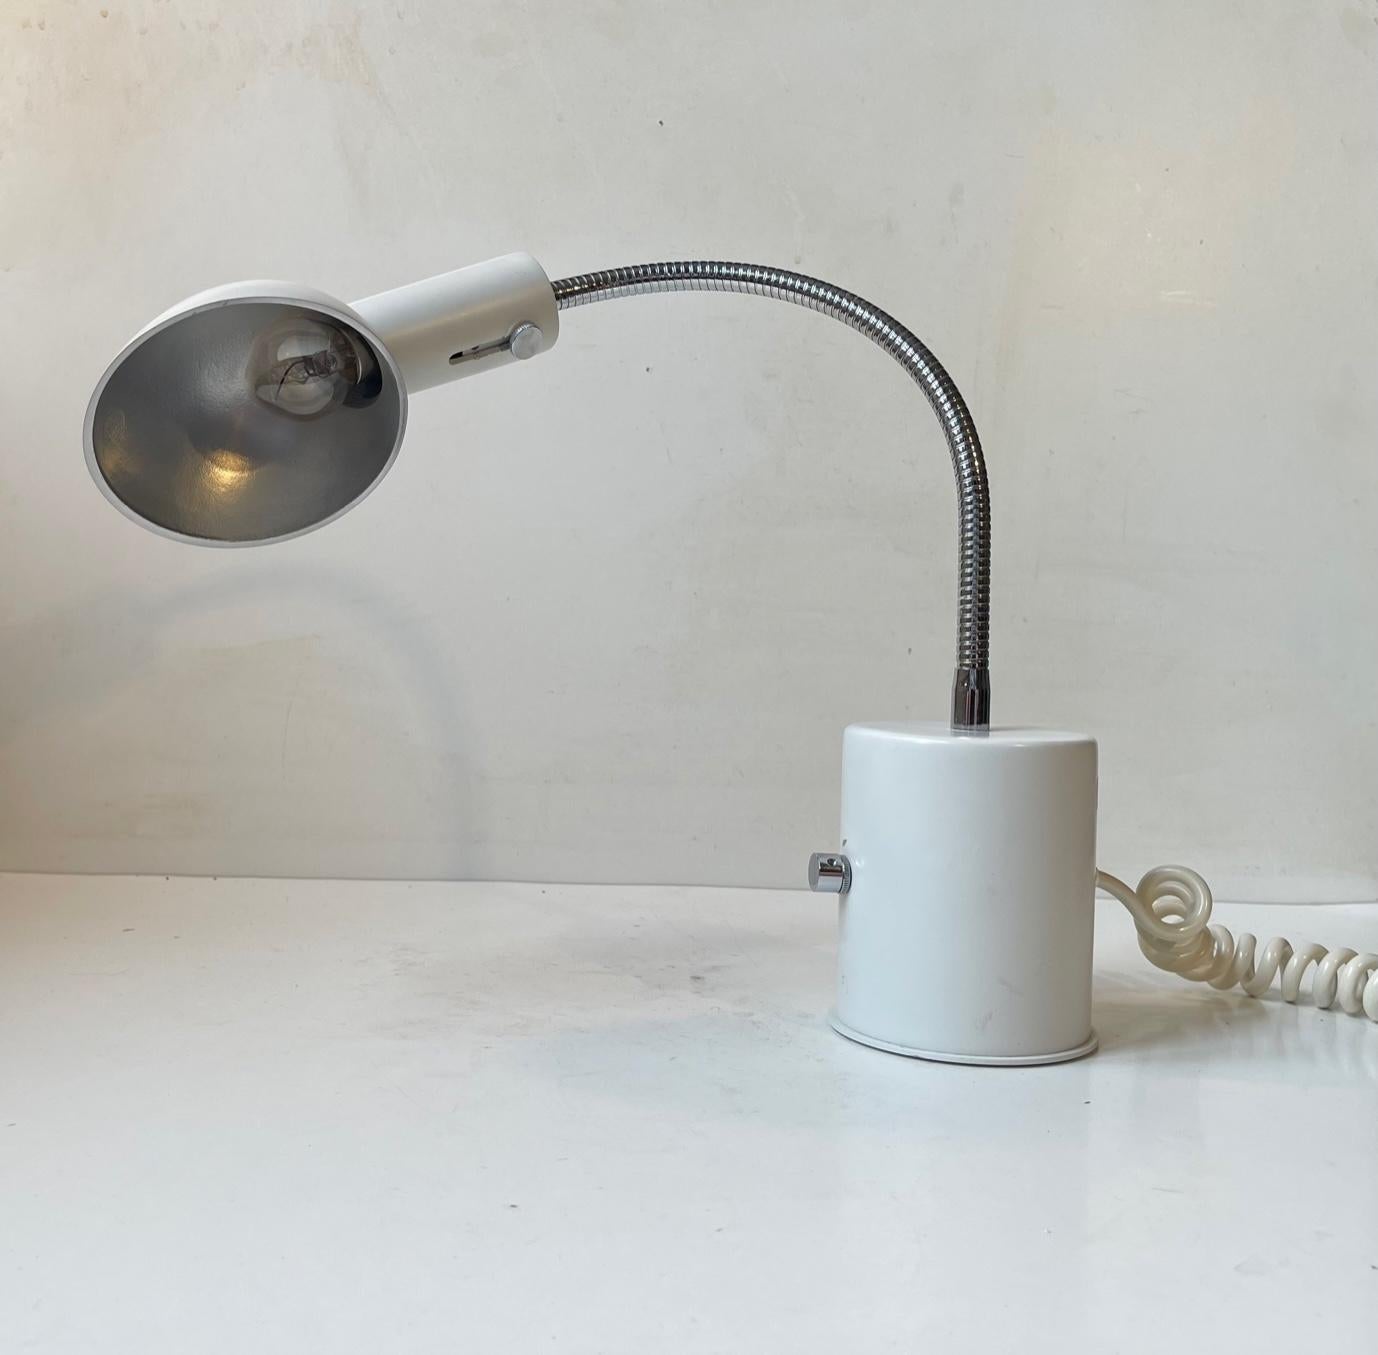 Aluminum Asger B. C. White Danish Minimalist Architects Desk or Table Lamp, 1980s For Sale